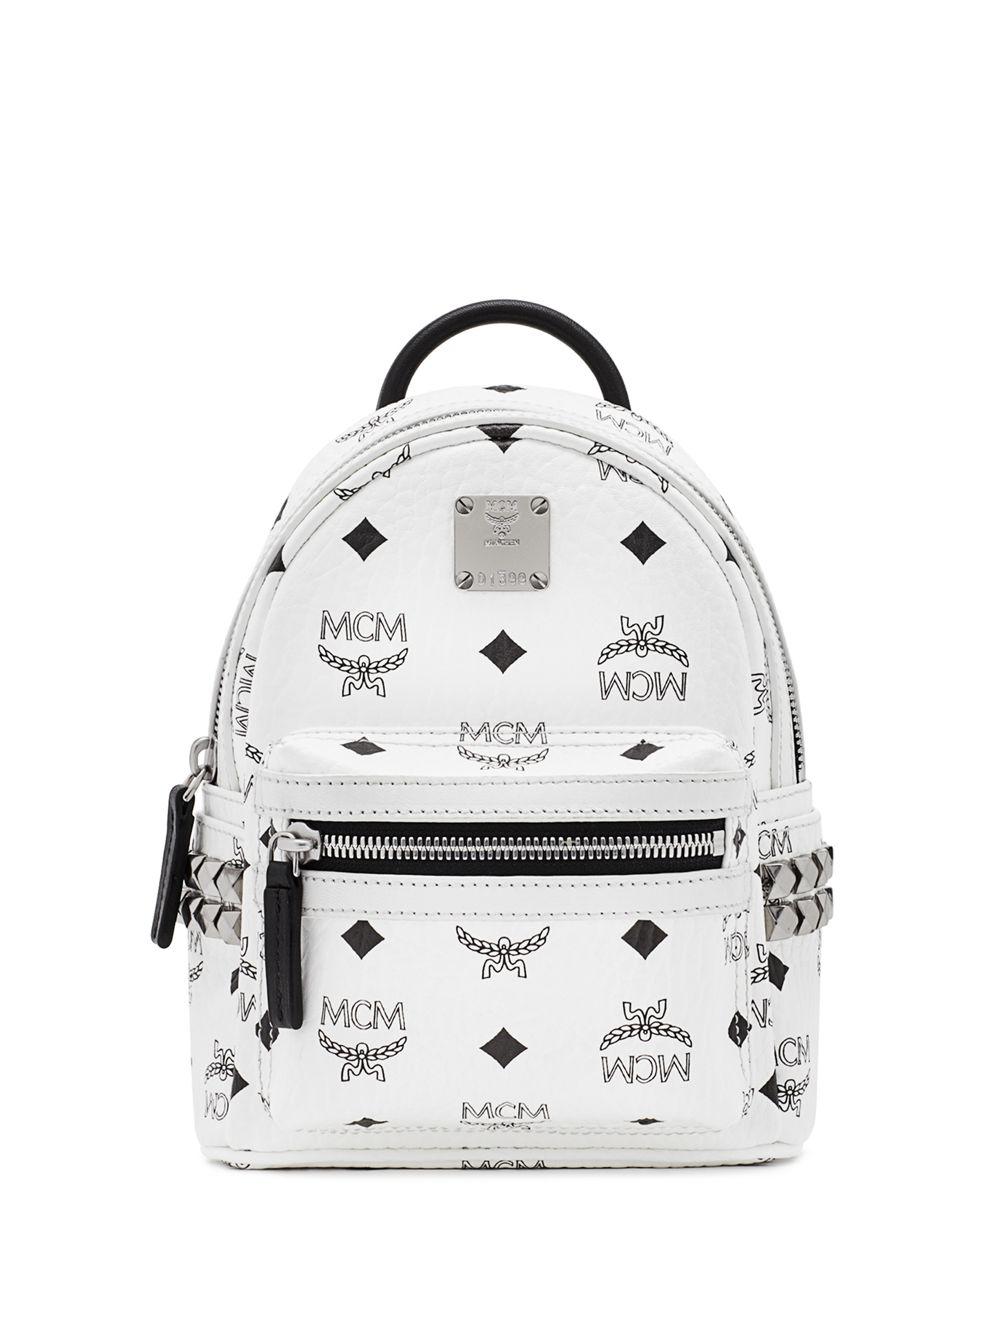 MCM X Bebe Boo Mini Studded Coated Canvas Backpack in White | Lyst